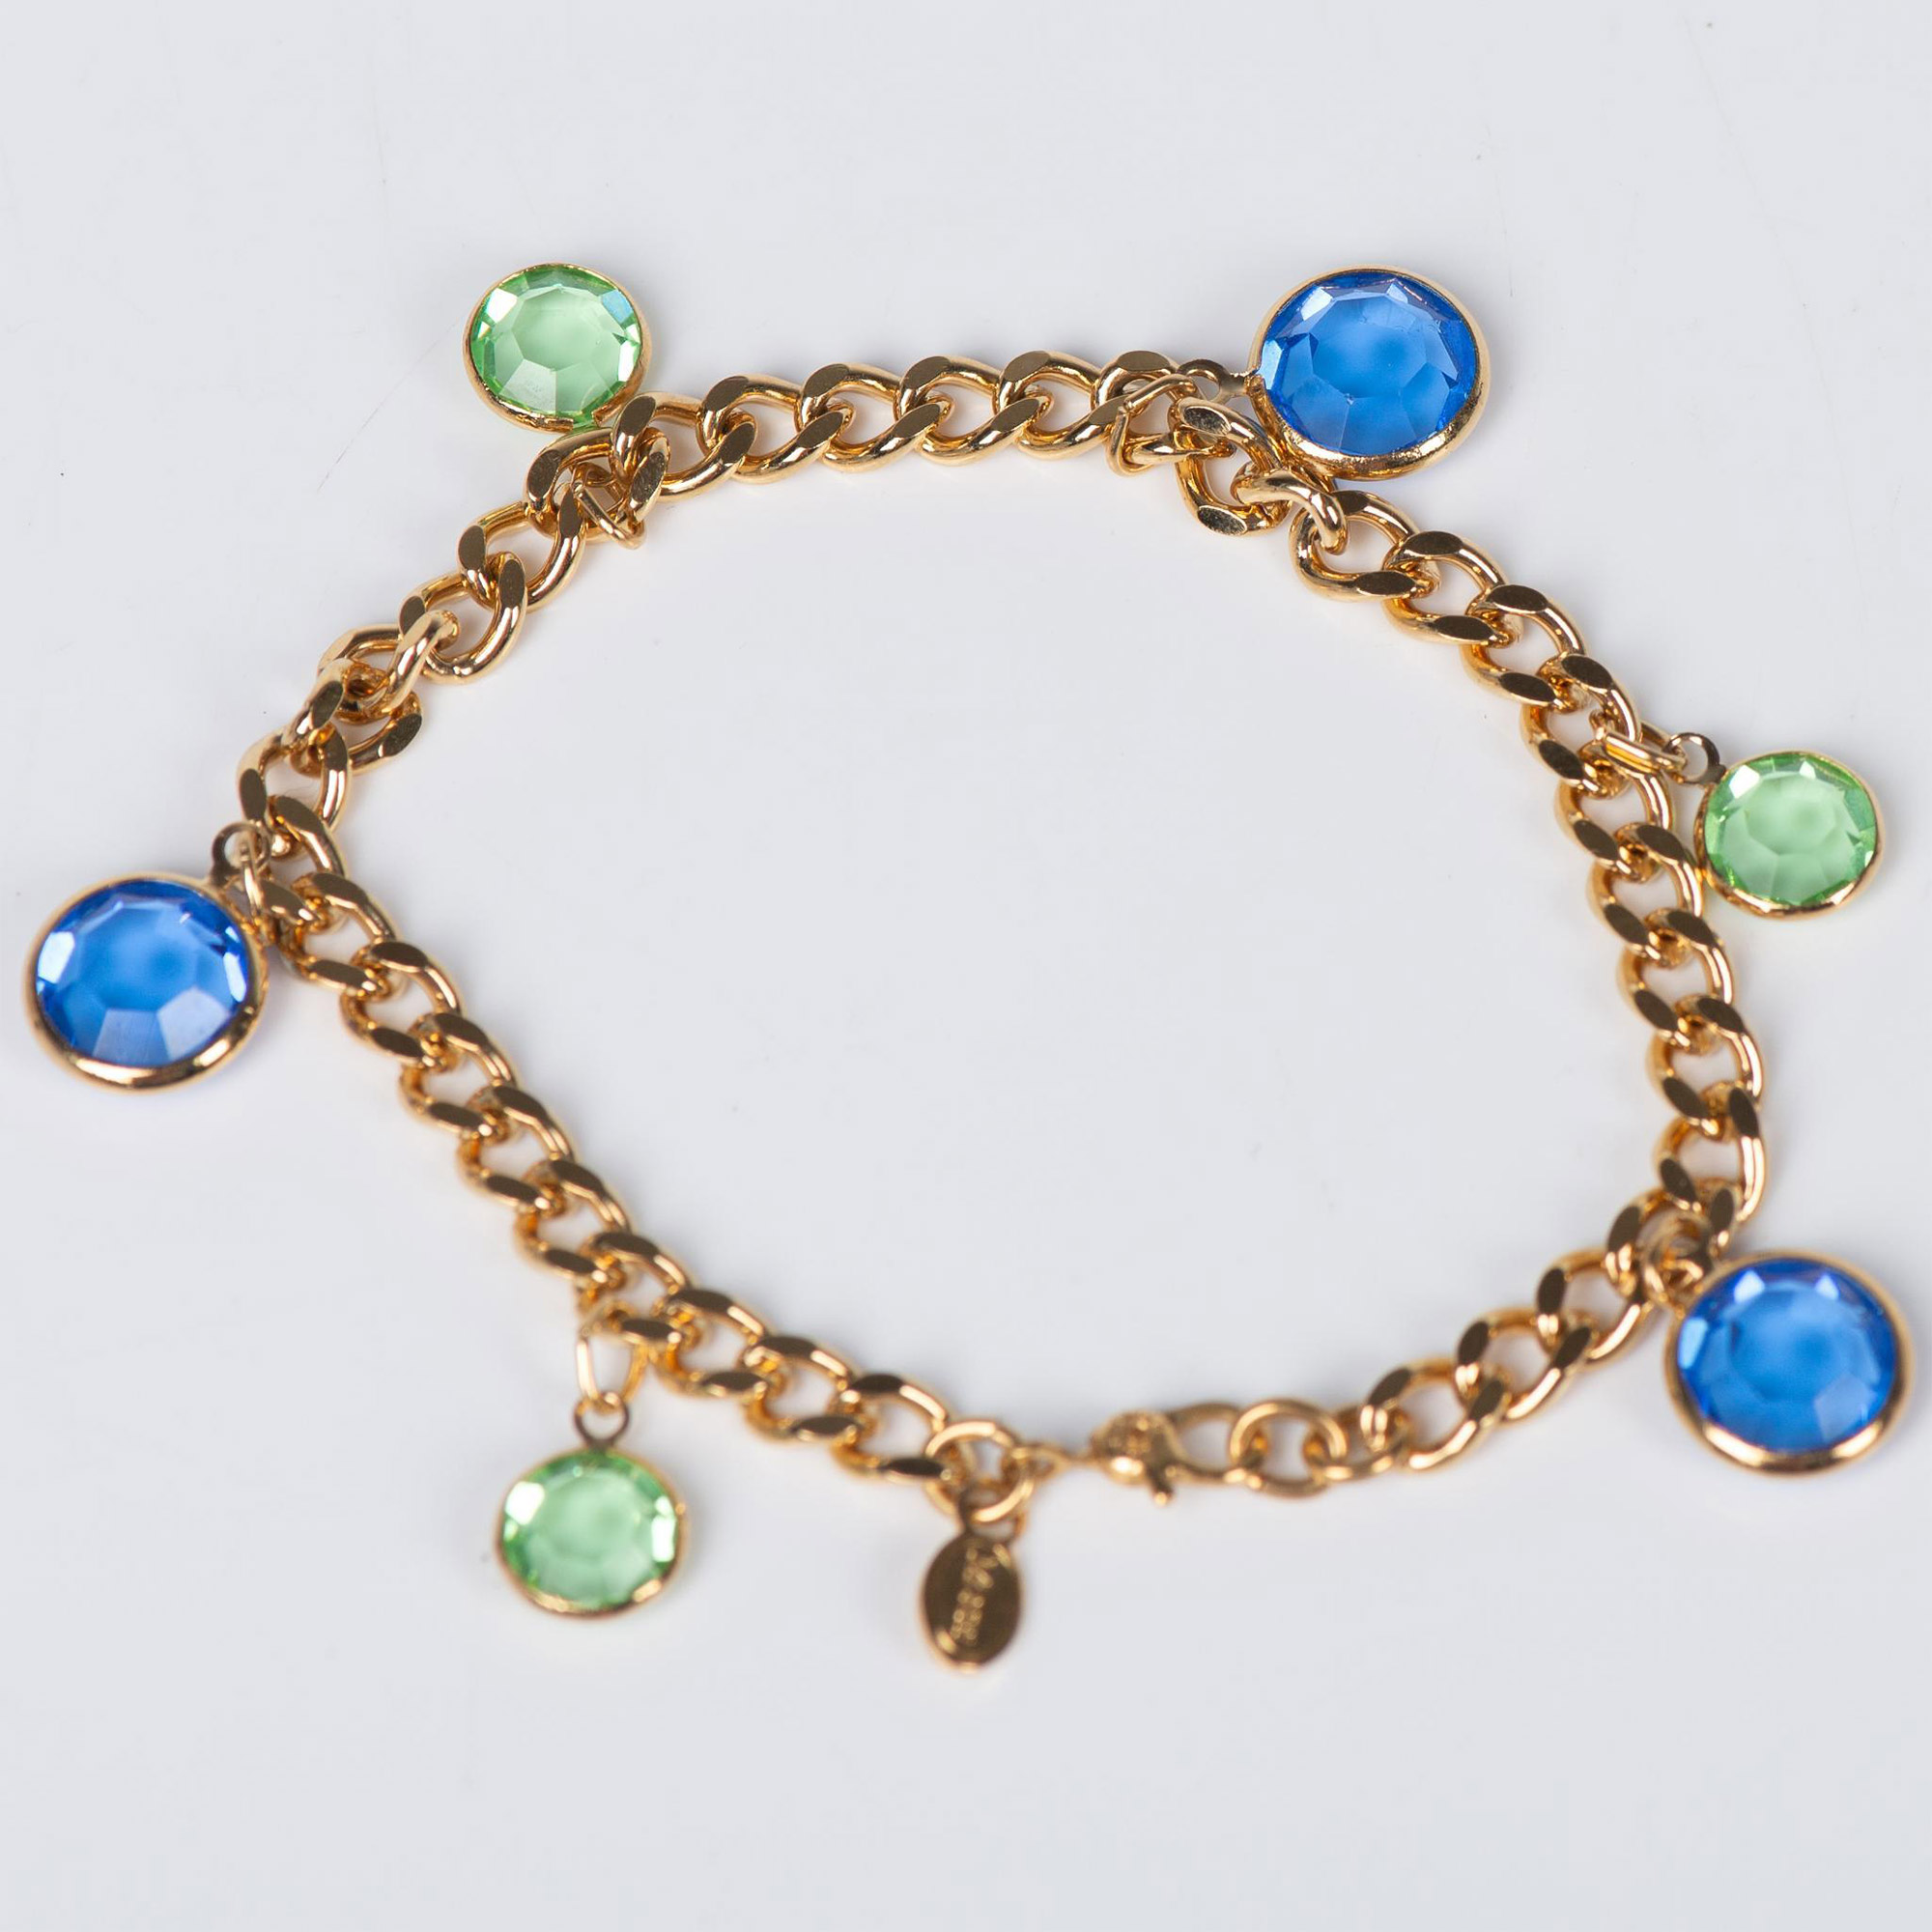 4pc Monet Rhinestone Brooch, Earrings and Bracelet - Image 4 of 5